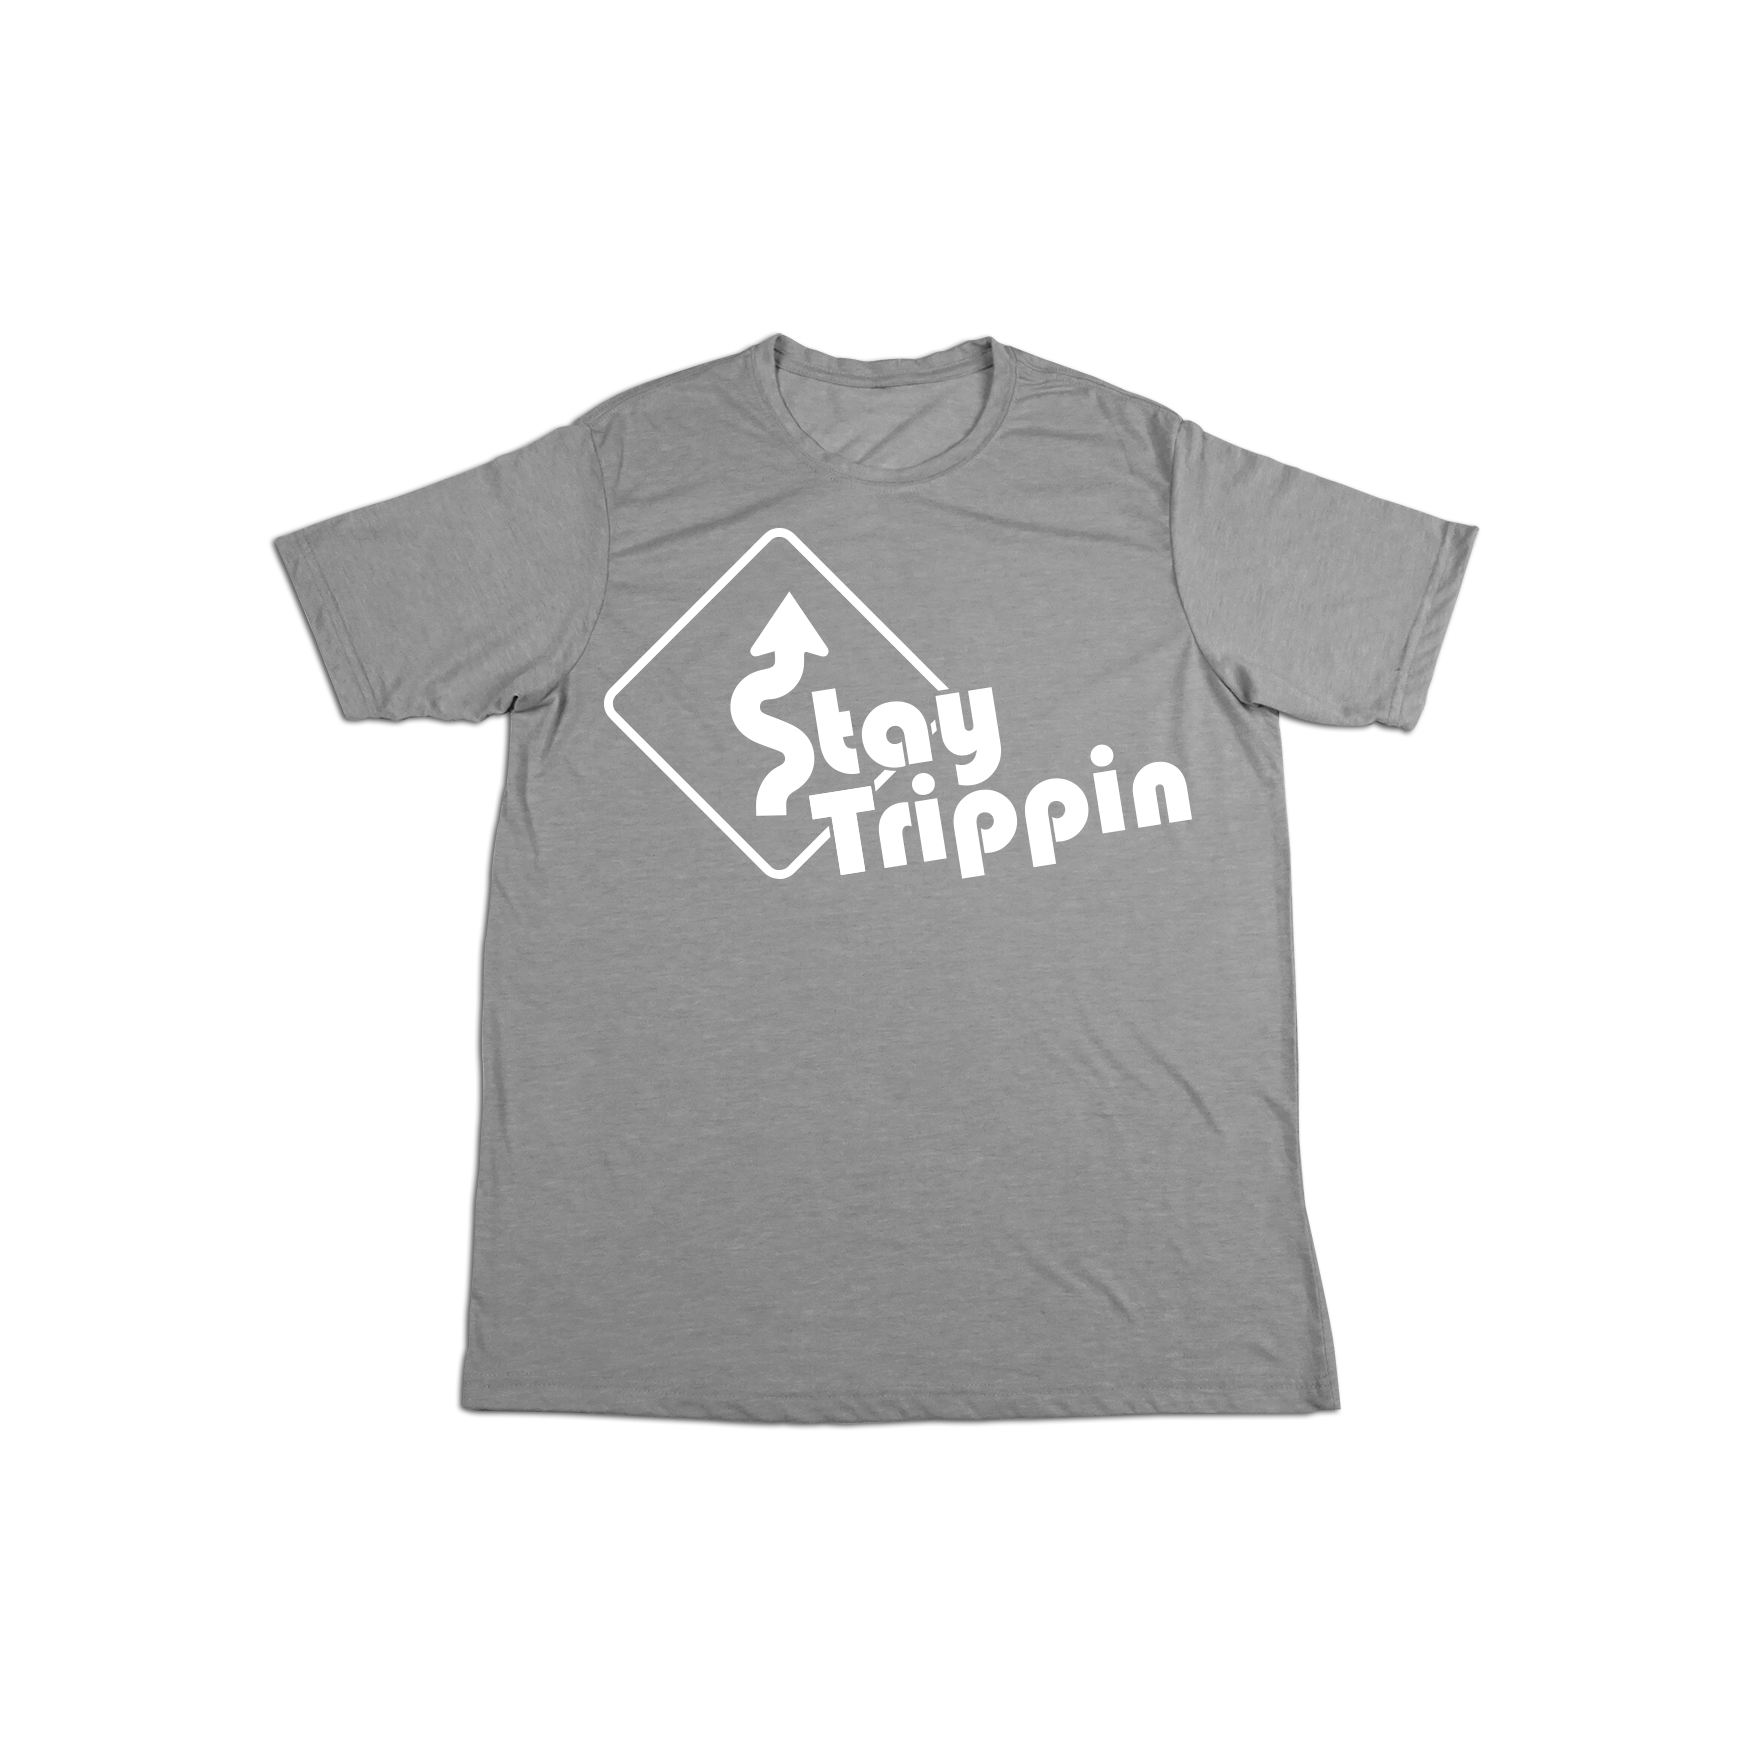 #STAYTRIPPIN SIGN TODDLER Short Sleeve Shirt - Hat Mount for GoPro